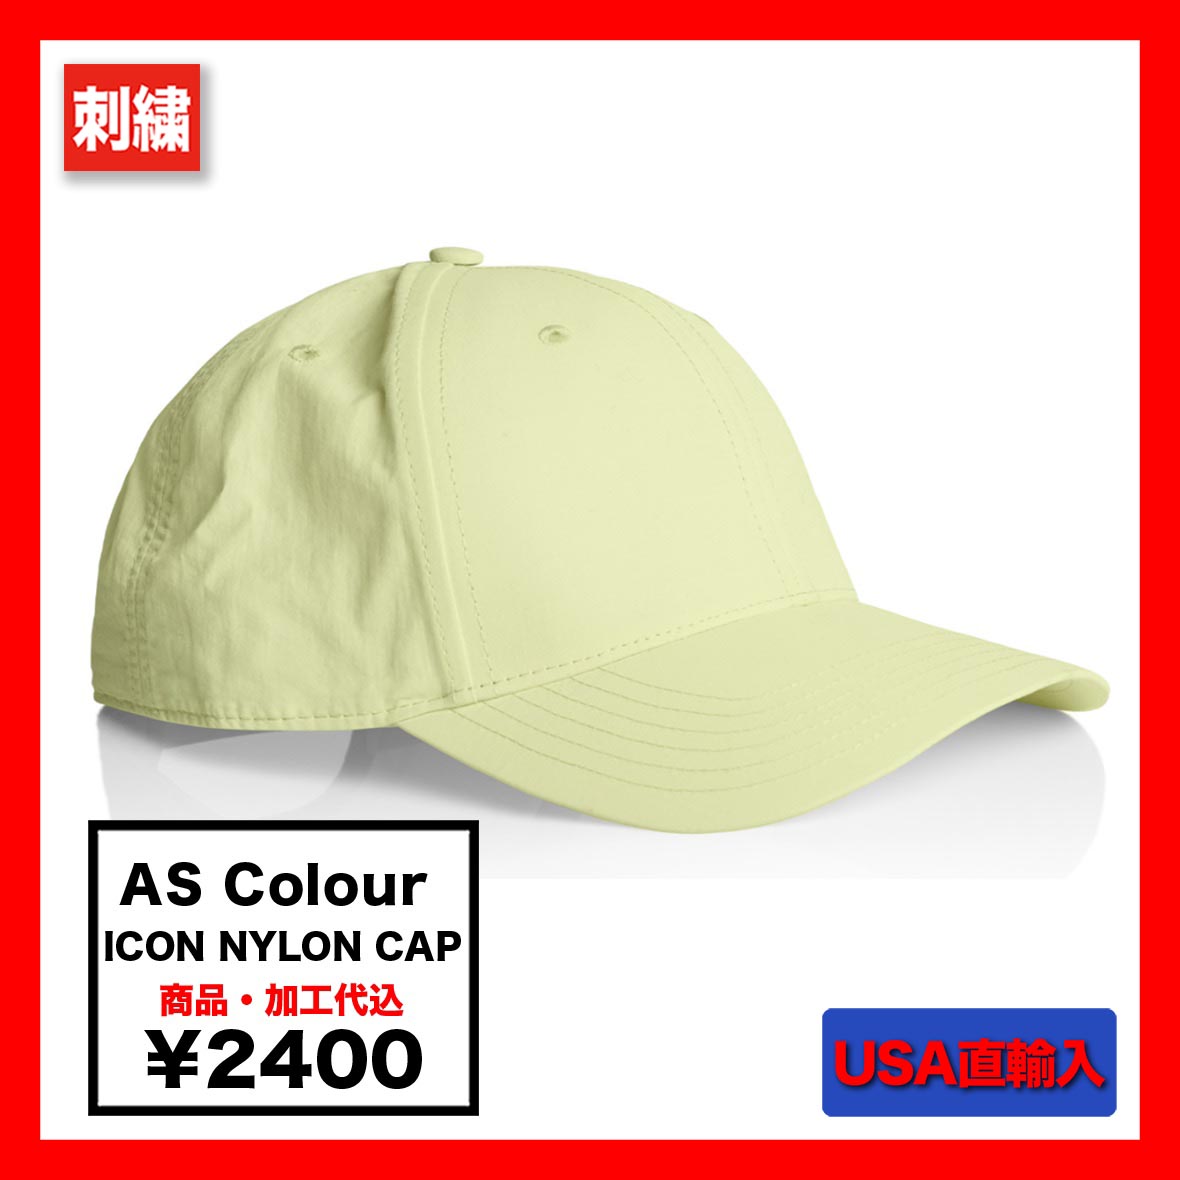 AS Colour アズカラー ICON NYLON CAP (品番1142US)